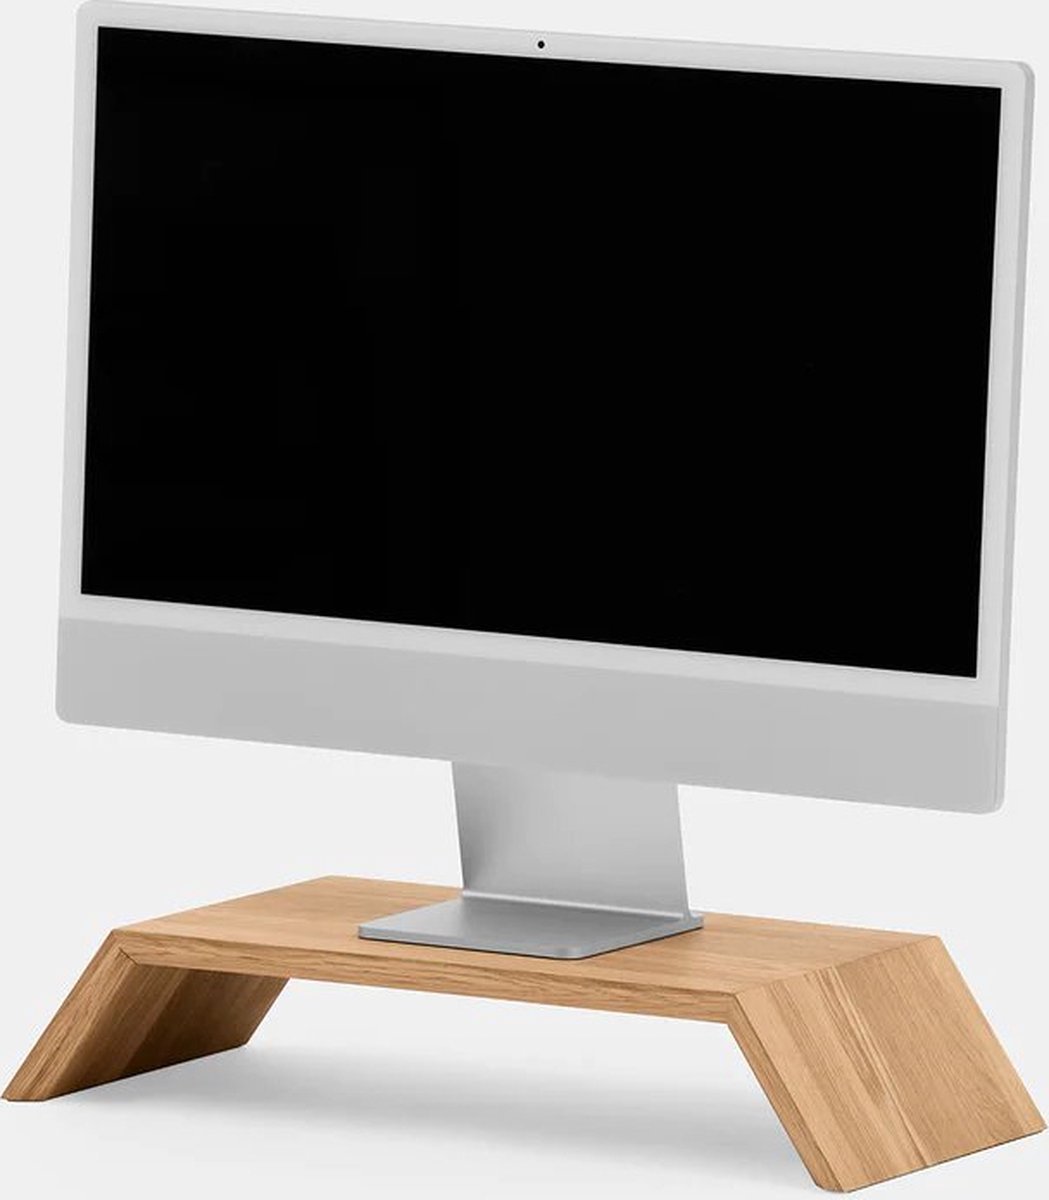 Oakywood Monitor Stand - Massief Eiken - Echt Hout Beeldschermverhoger iMac Standaard - Ergonomisch en Stijlvol